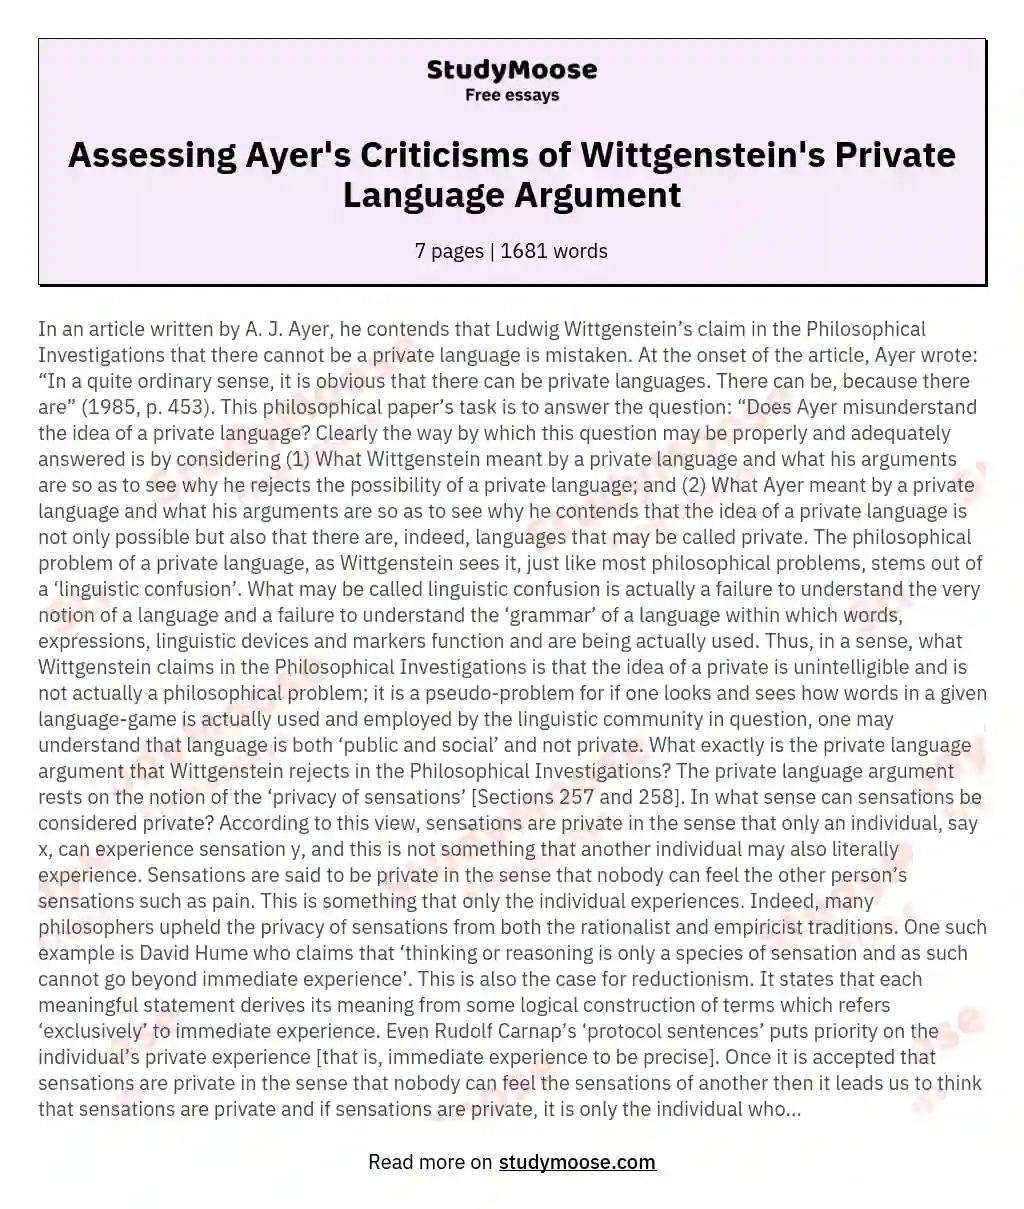 Assessing Ayer's Criticisms of Wittgenstein's Private Language Argument essay